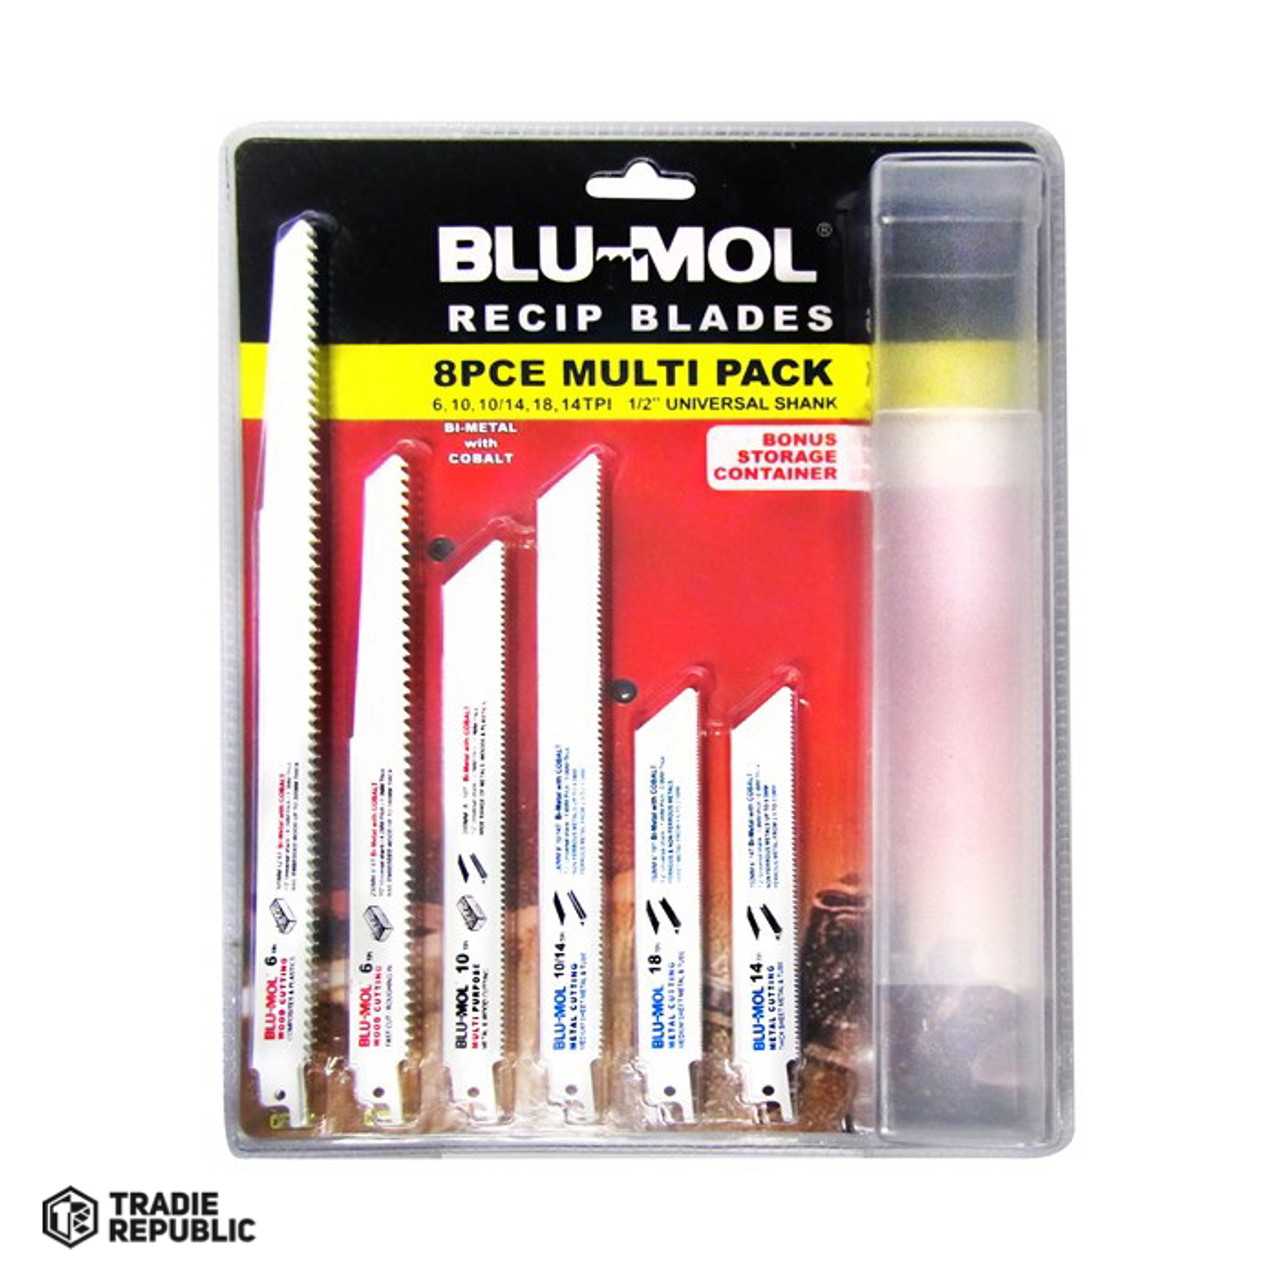 BL6400-S1 Blu-Mol 8 Pce Recip Blade Multi-Pak